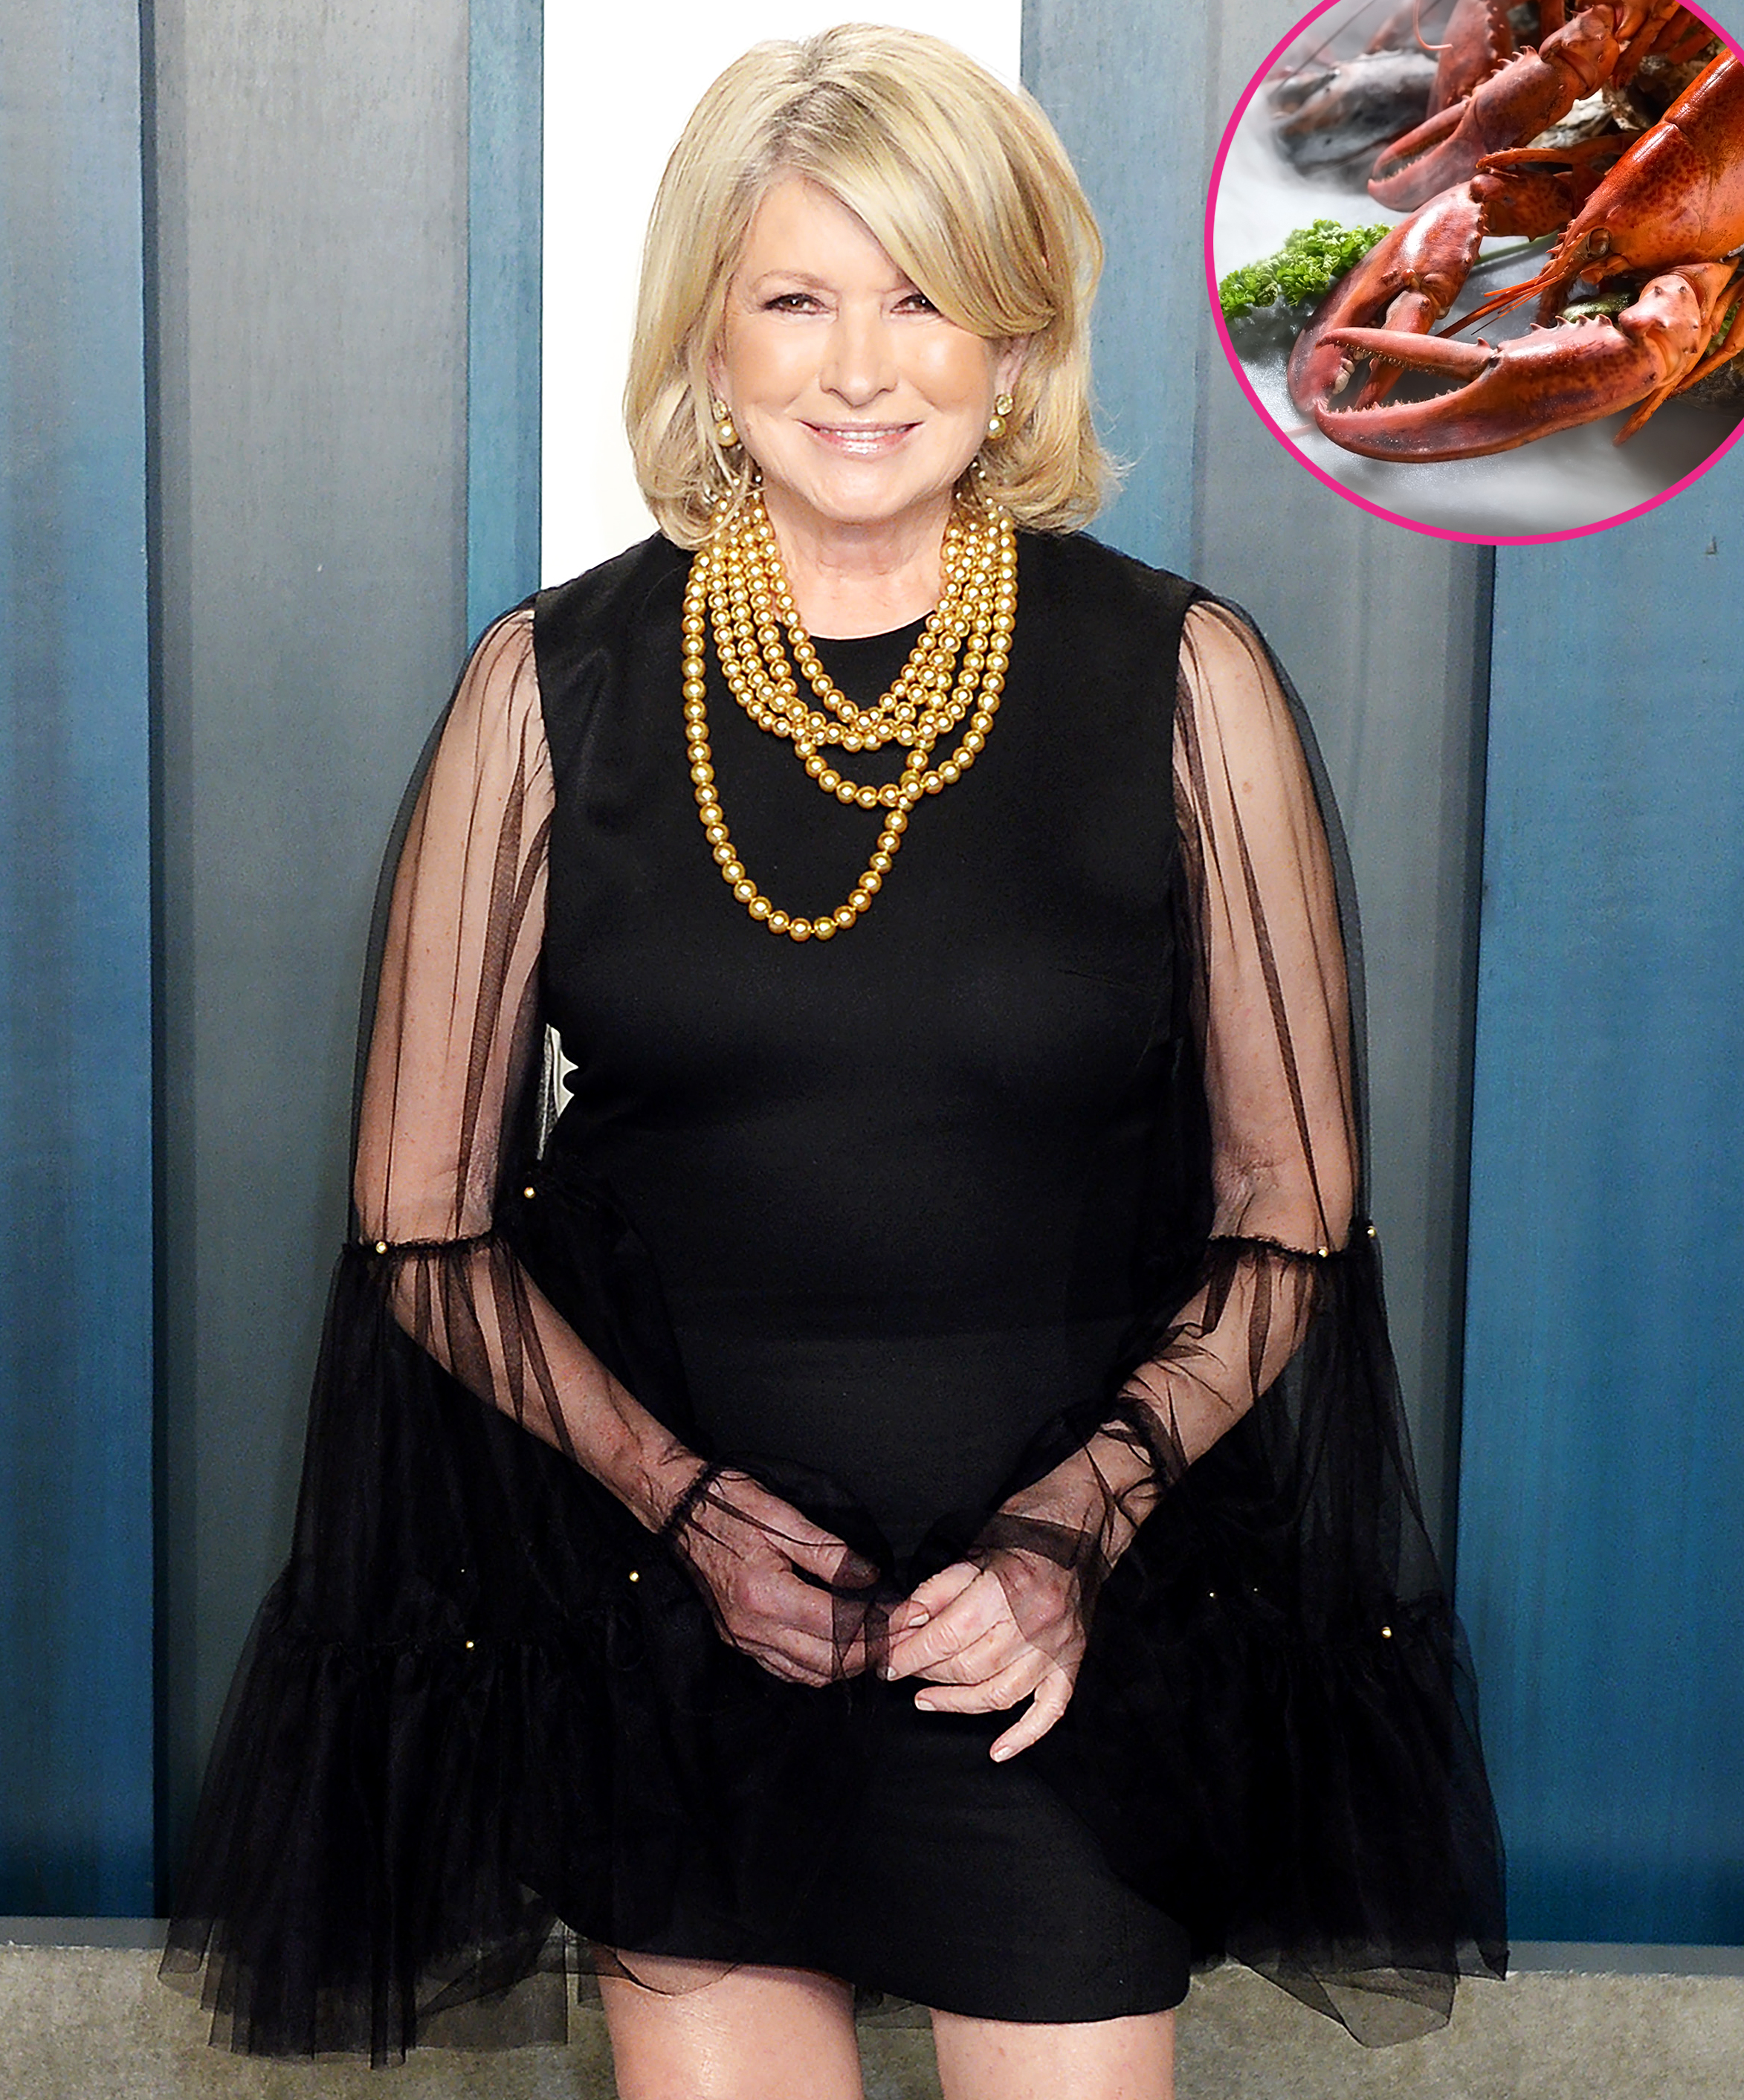 Martha Stewart Slams Claim That She's 'Tone Deaf' for Eating Lobster